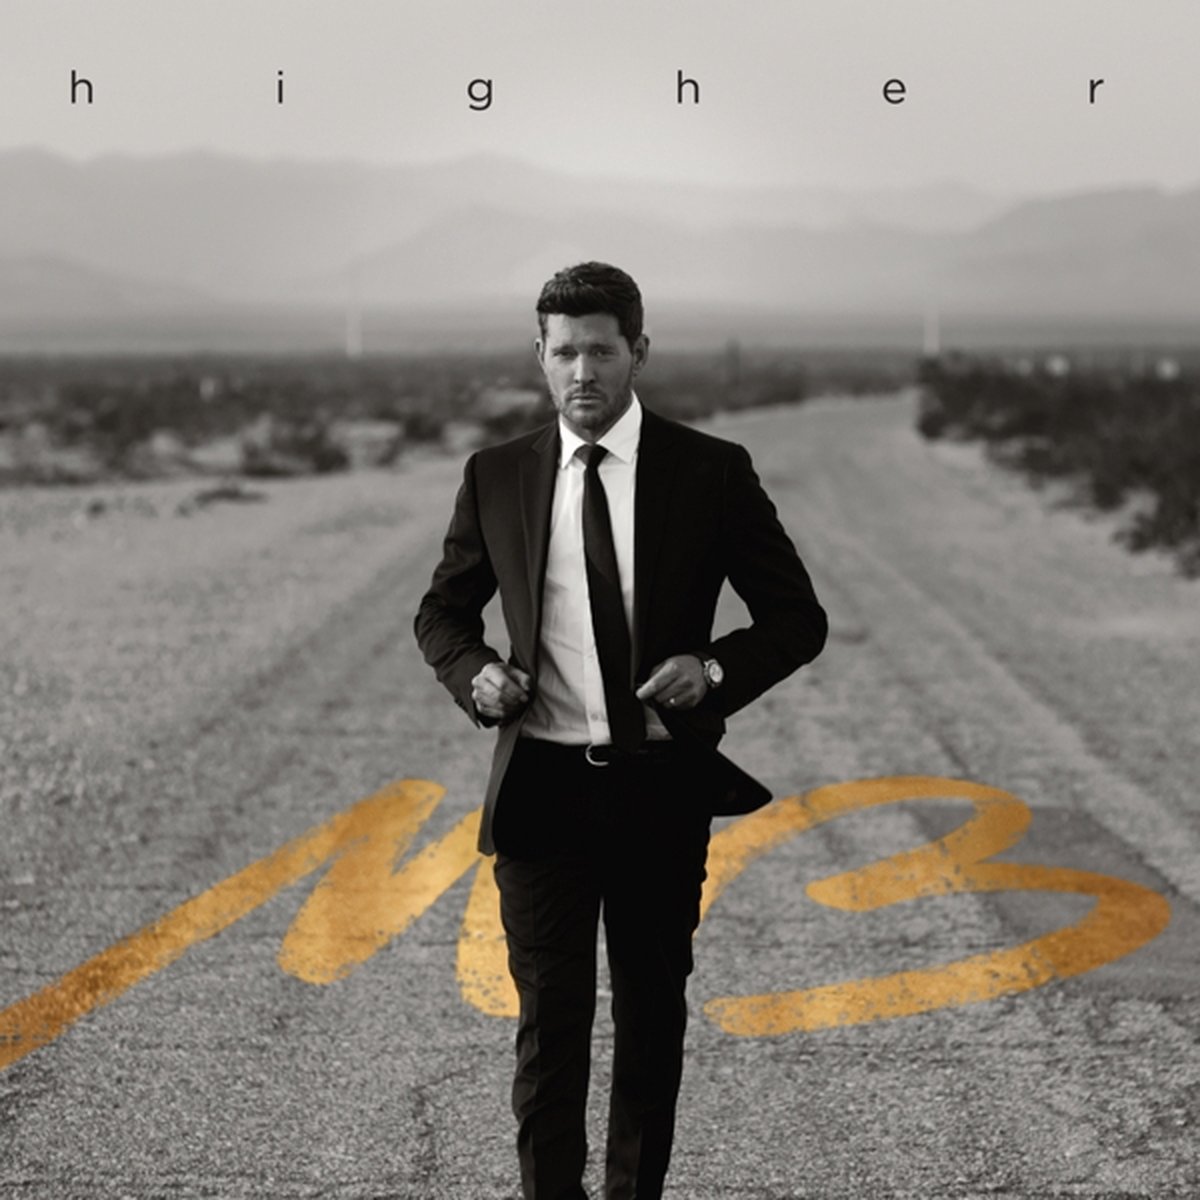 Higher (CD) - Michael Bublé